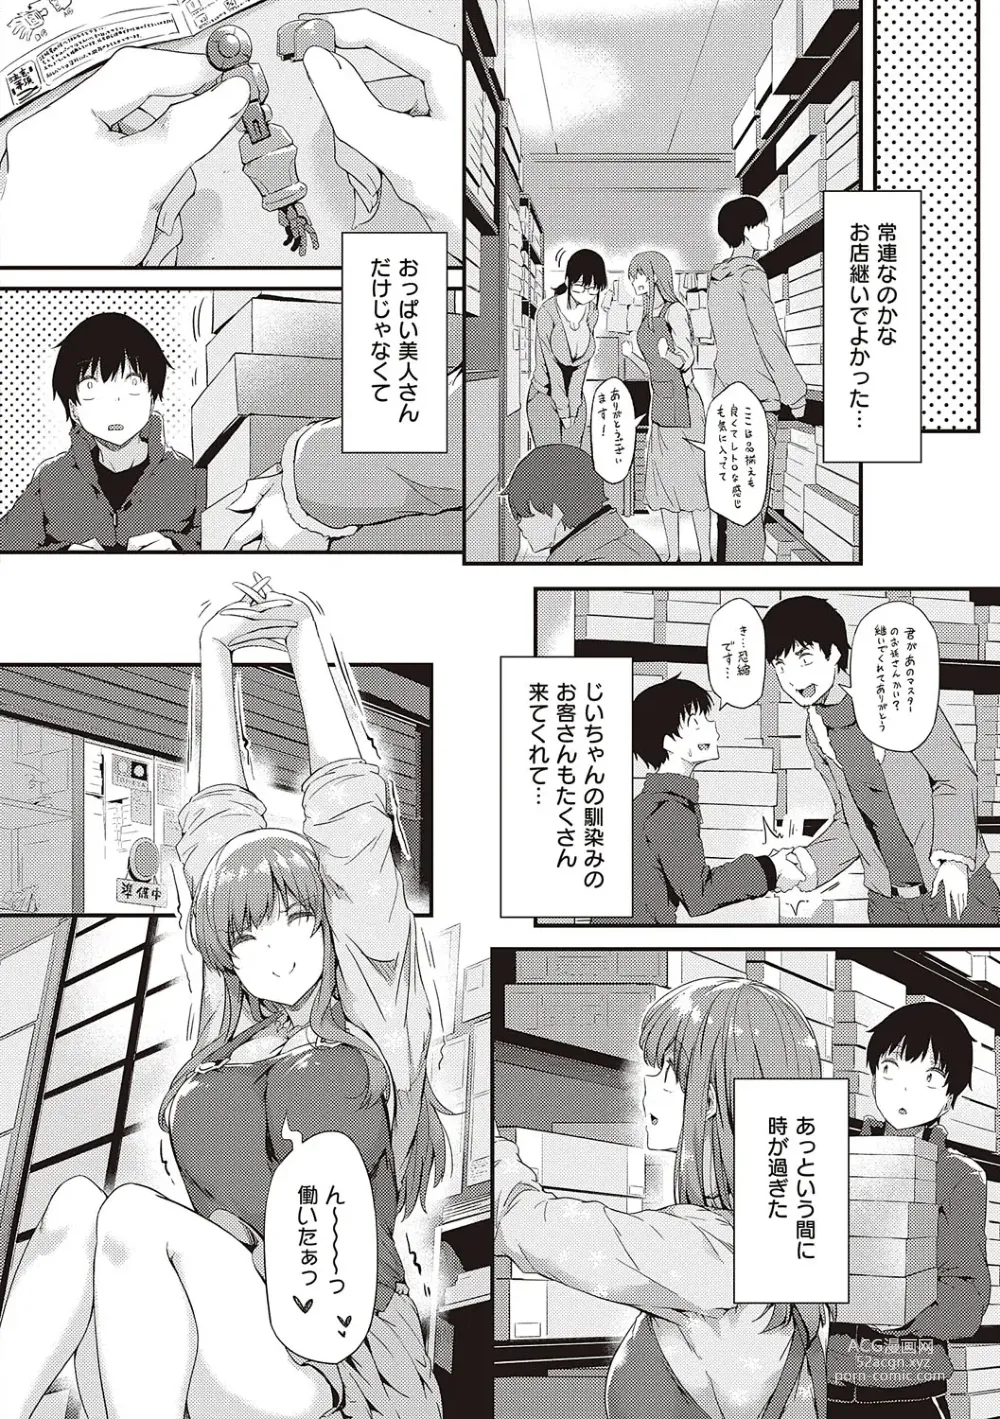 Page 19 of manga Shiranai Koto Shiritai no? - Dont you wanna learn something new?